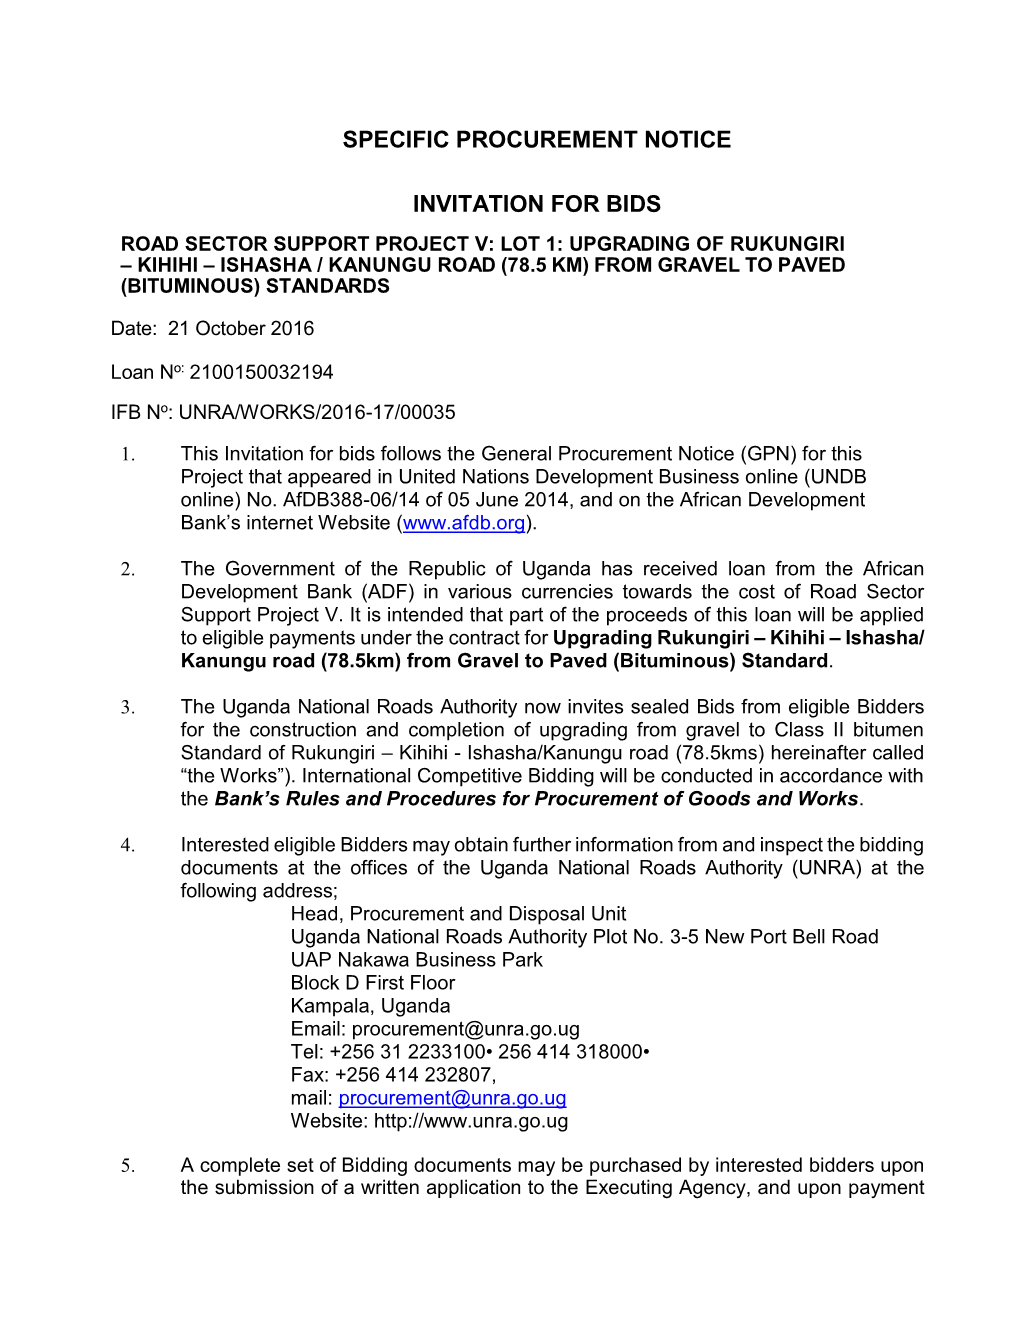 Specific Procurement Notice Invitation for Bids